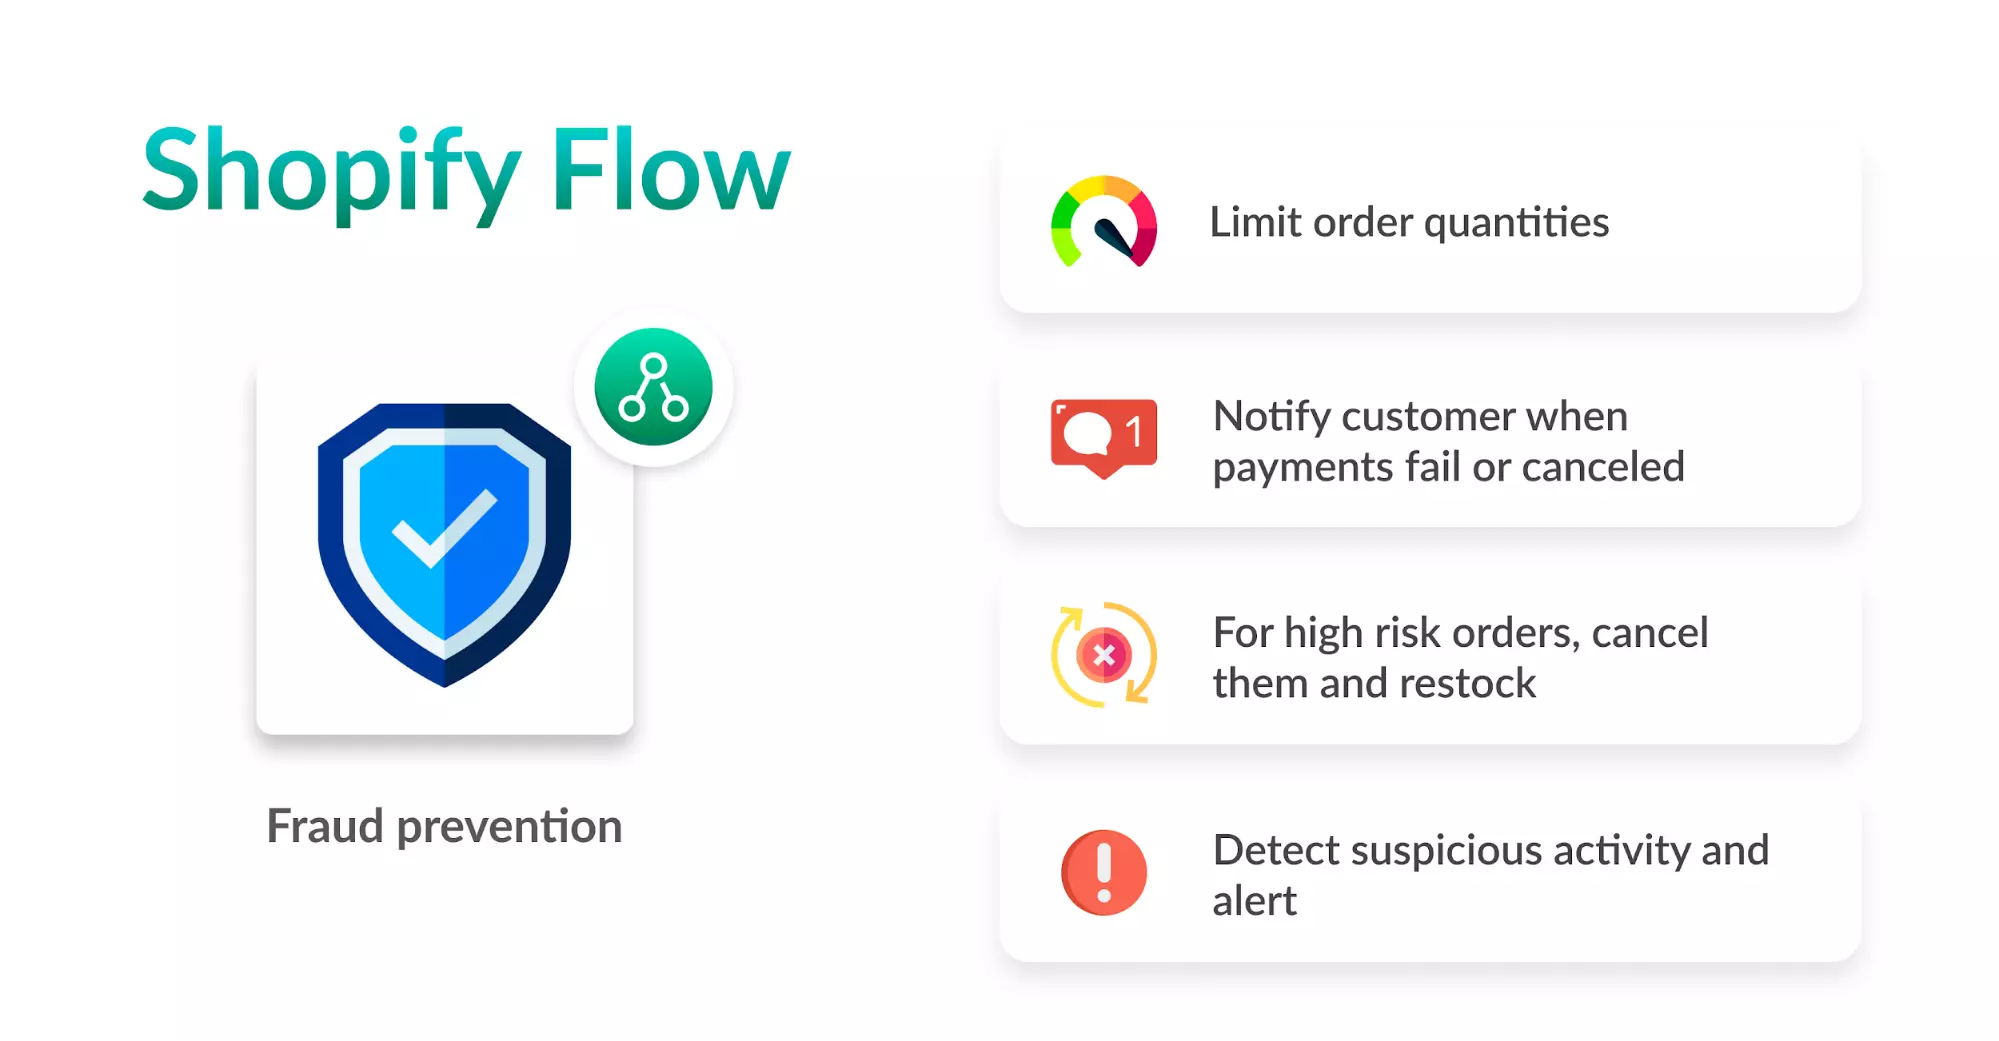 Shopify flow's anti-fraud methods